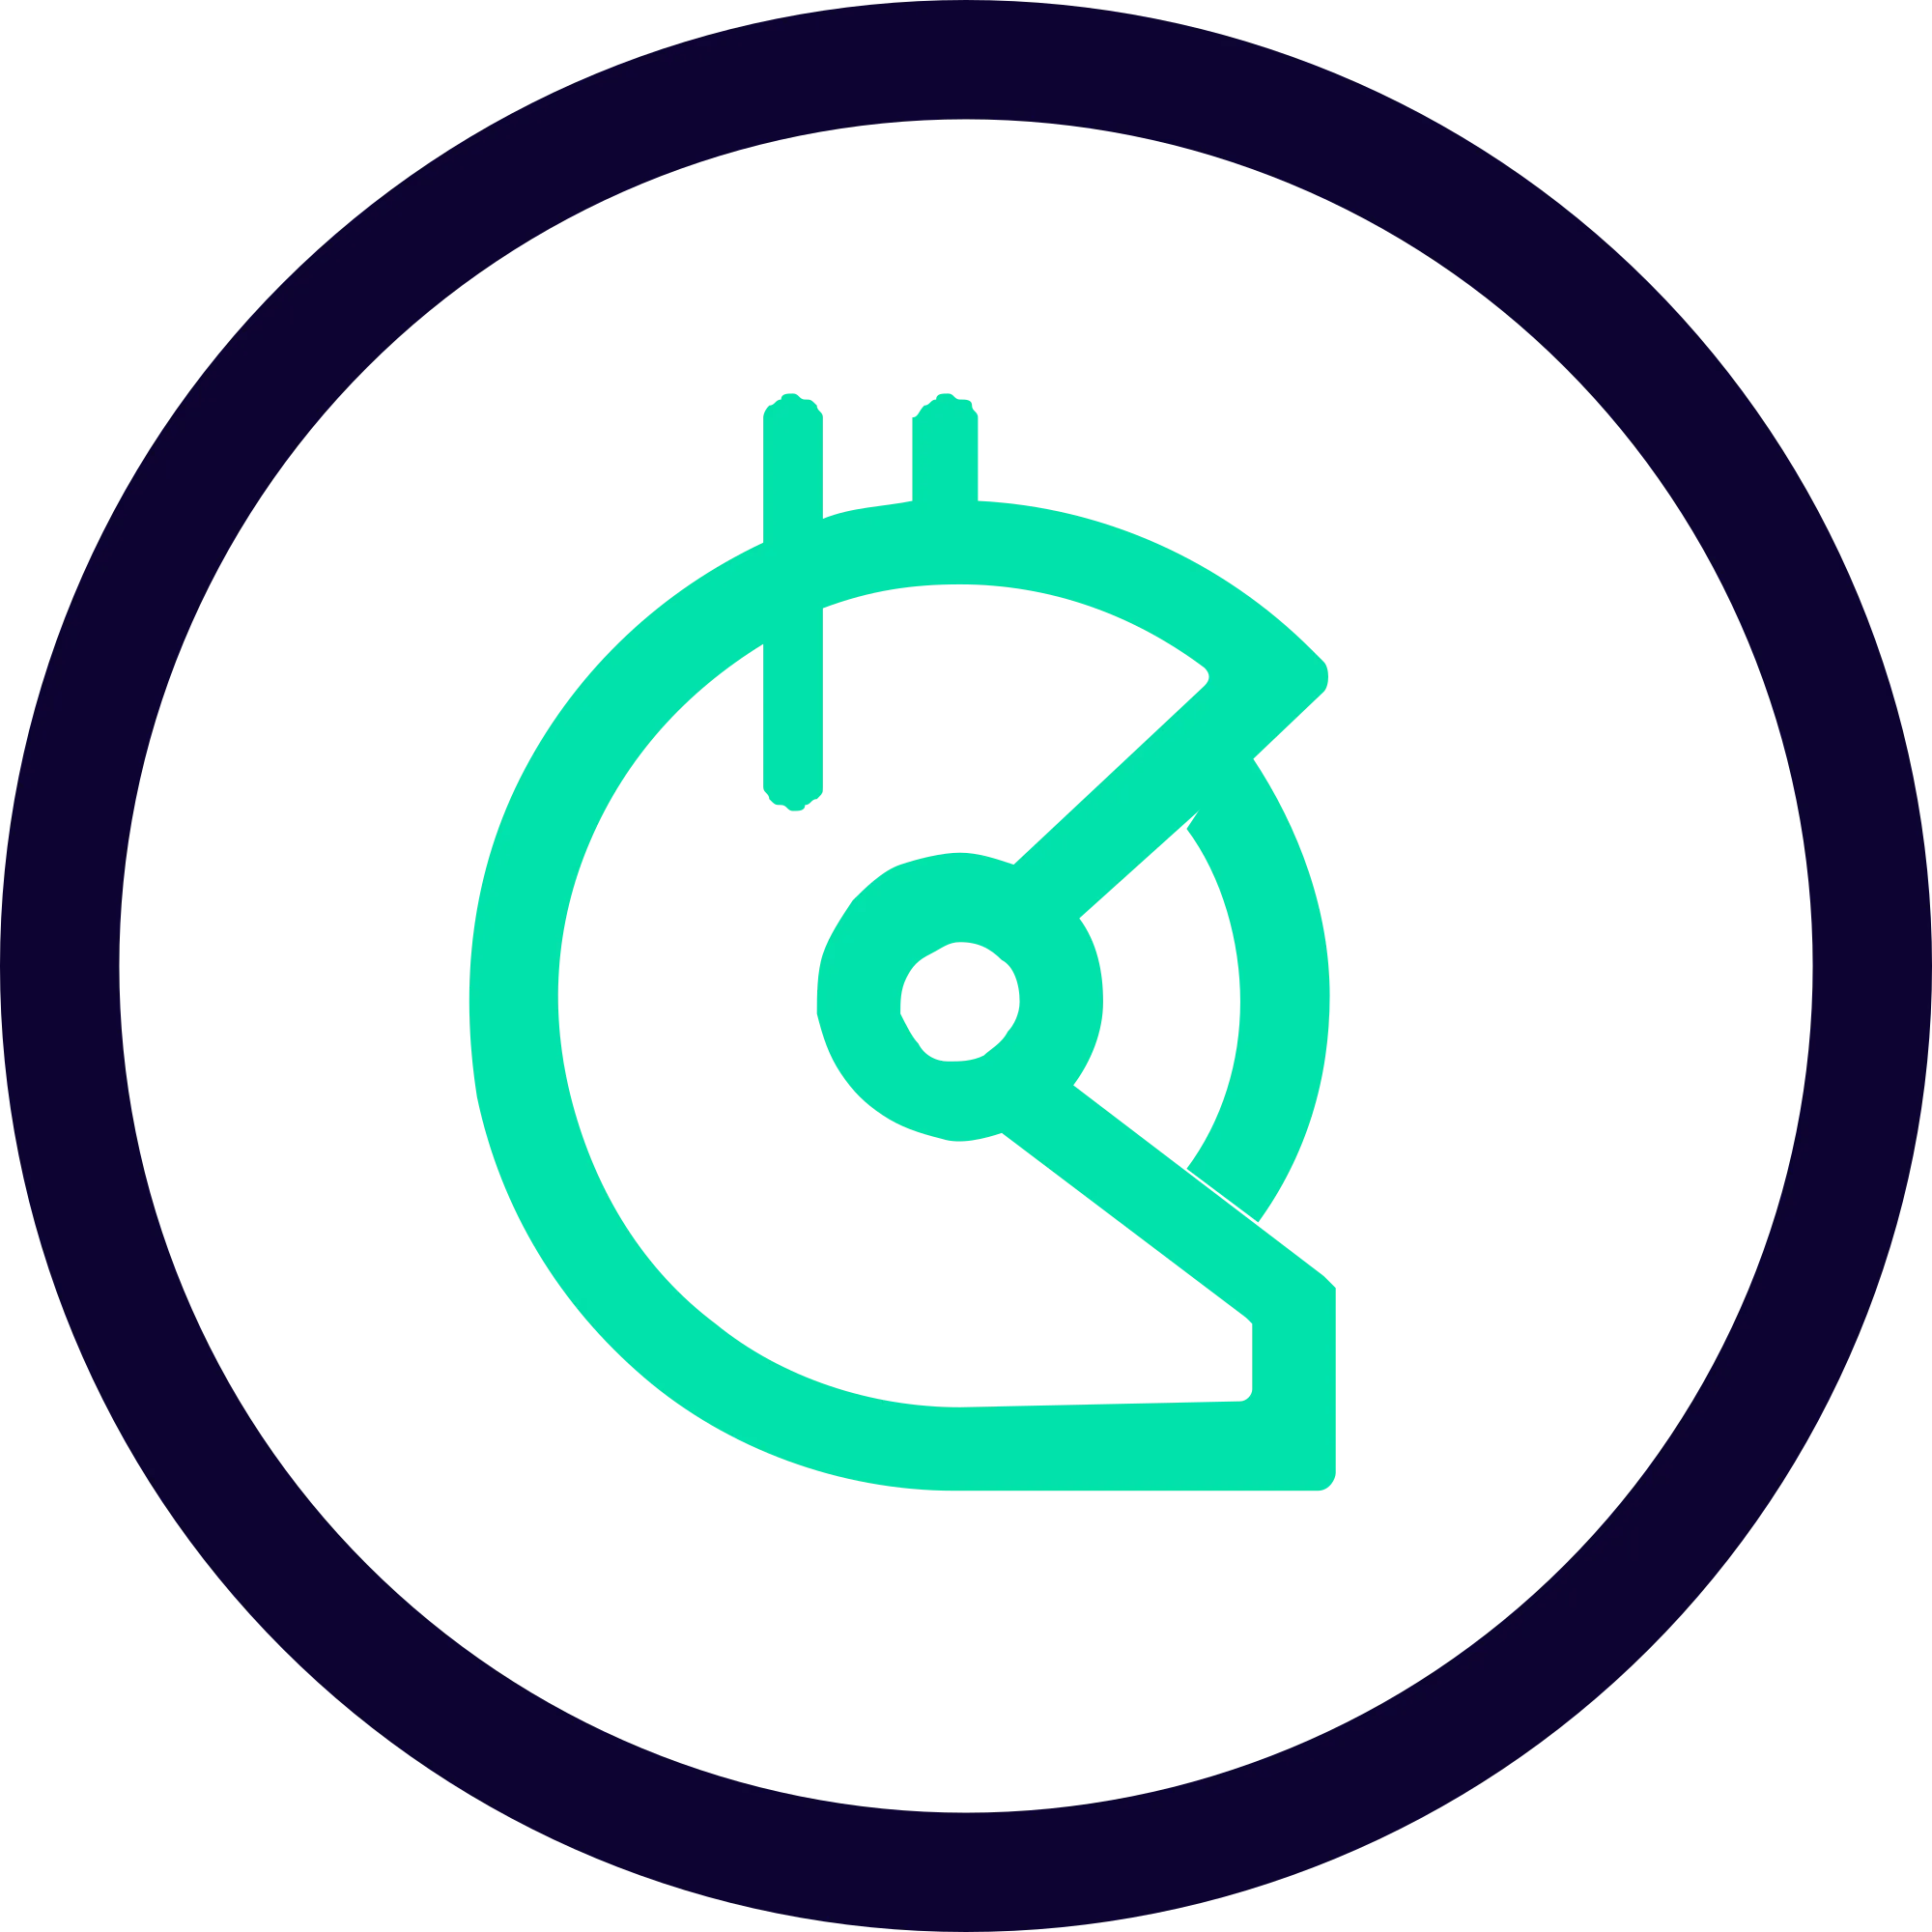 Gitcoin logo in png format